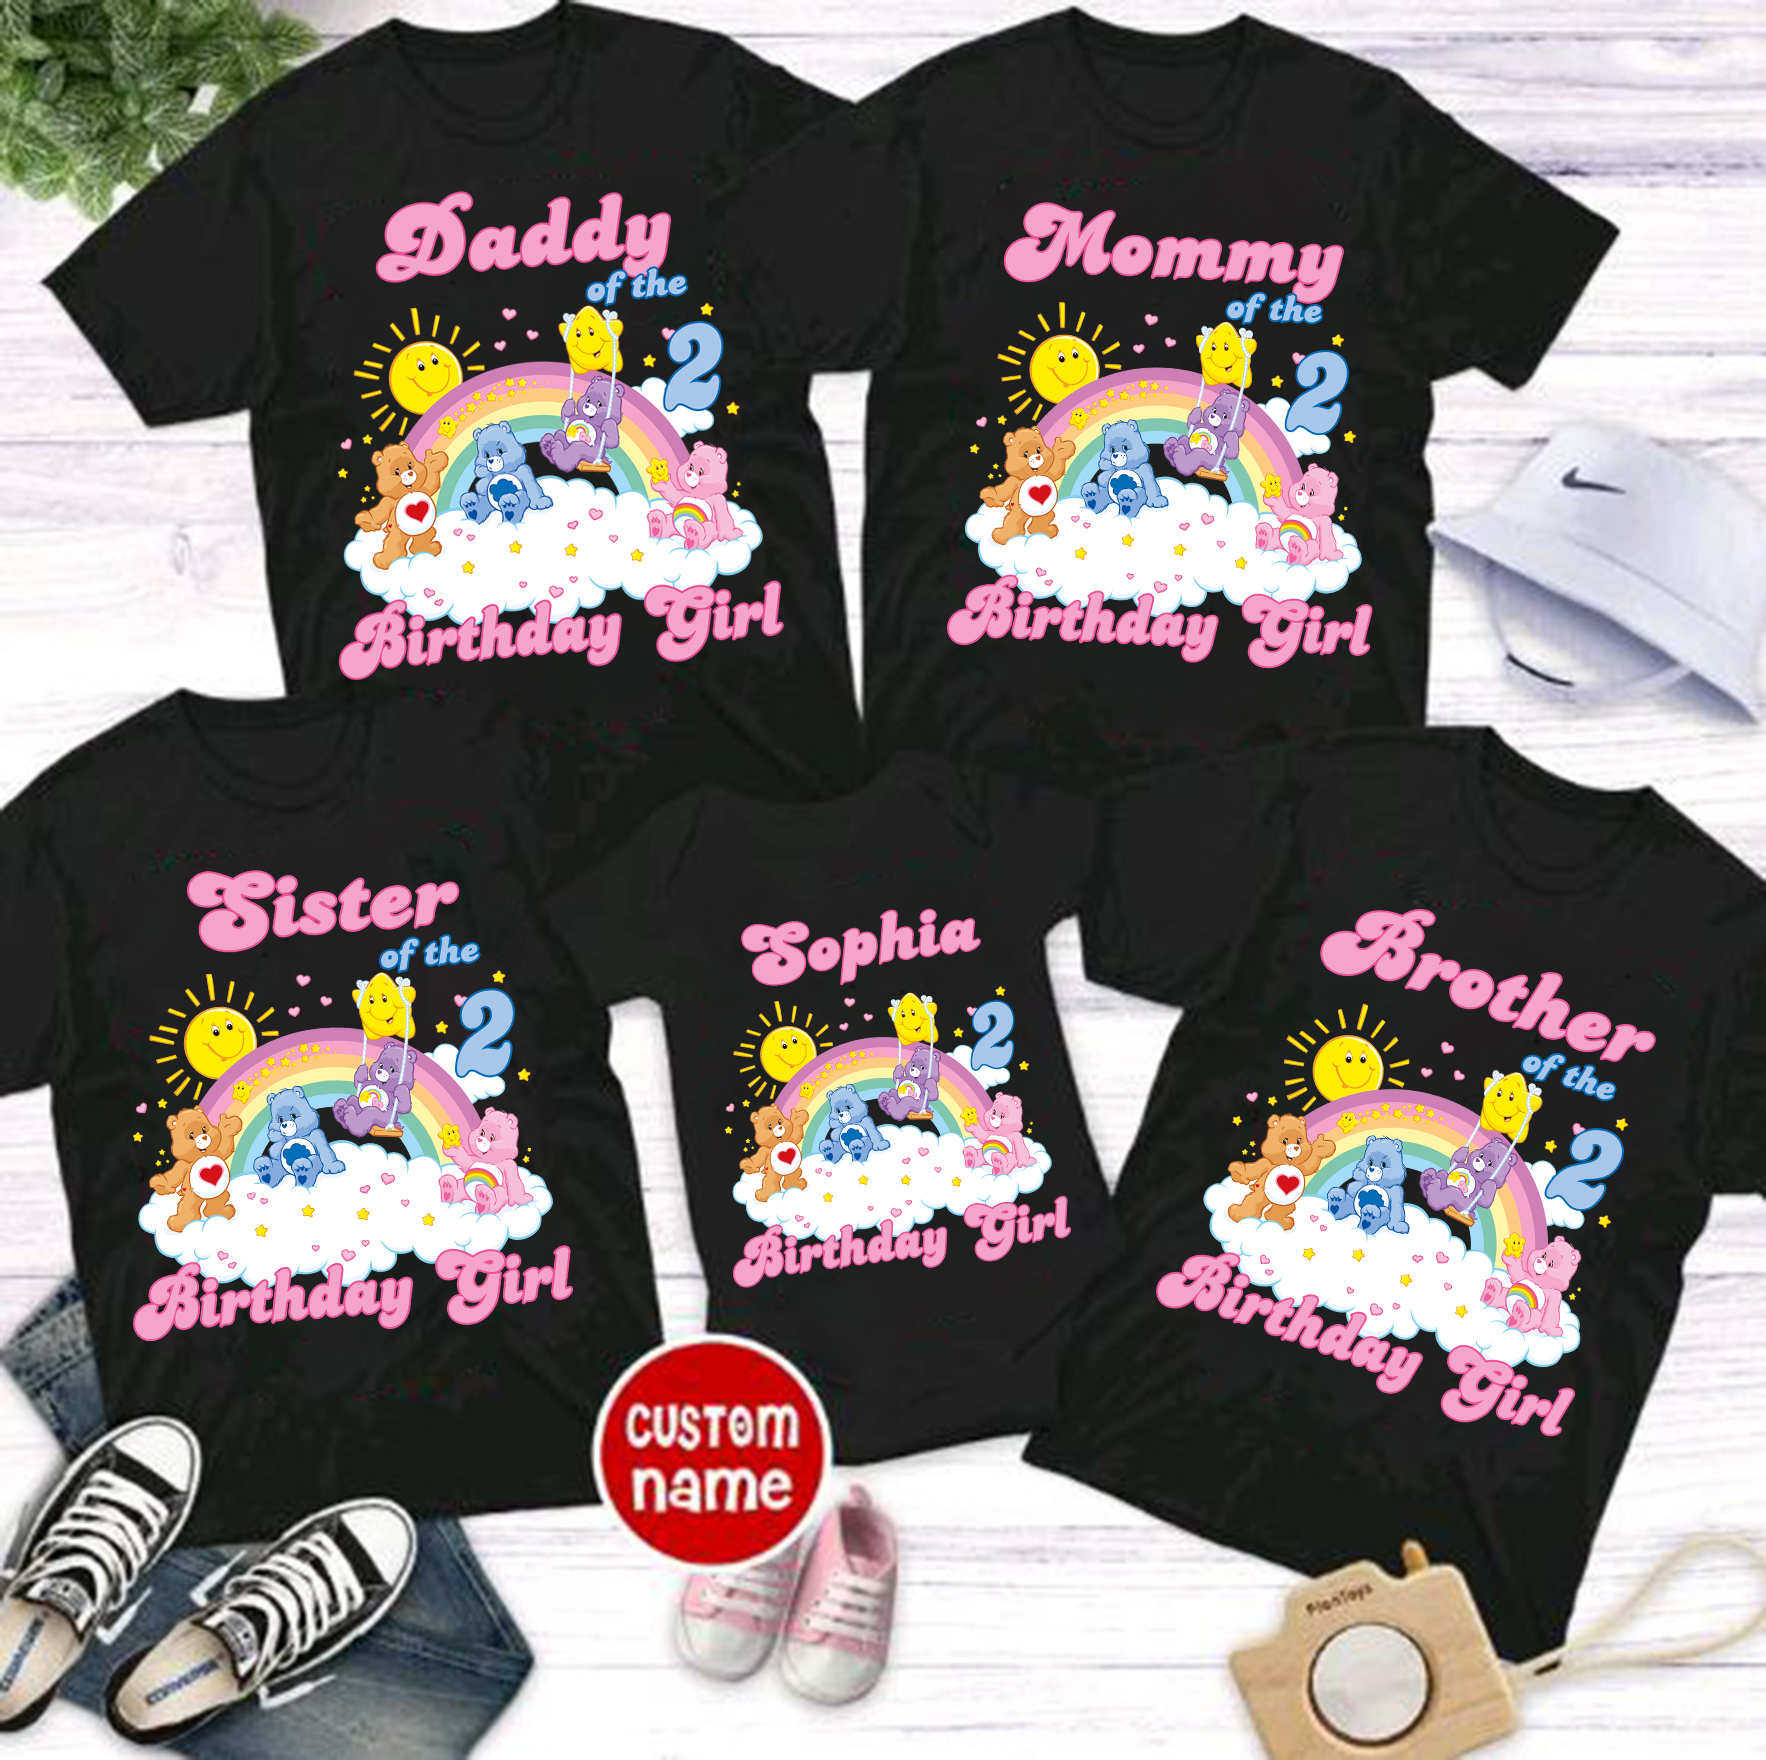 Personalized Care Bears Birthday Shirt Set, Family Matching Shirt, Cute Bear Shirt